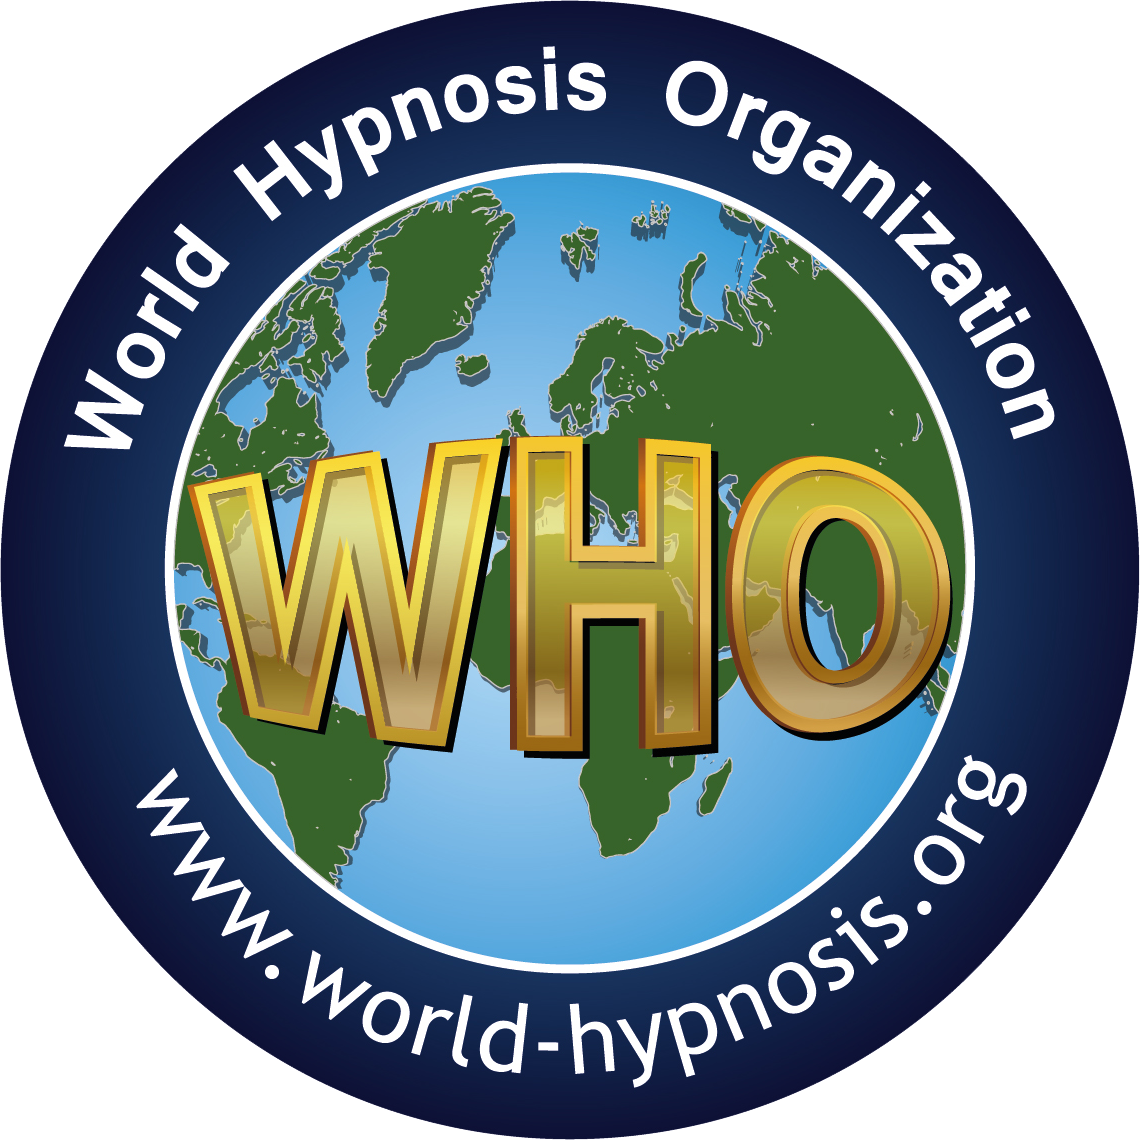 World Hypnosis Organization (WHO)